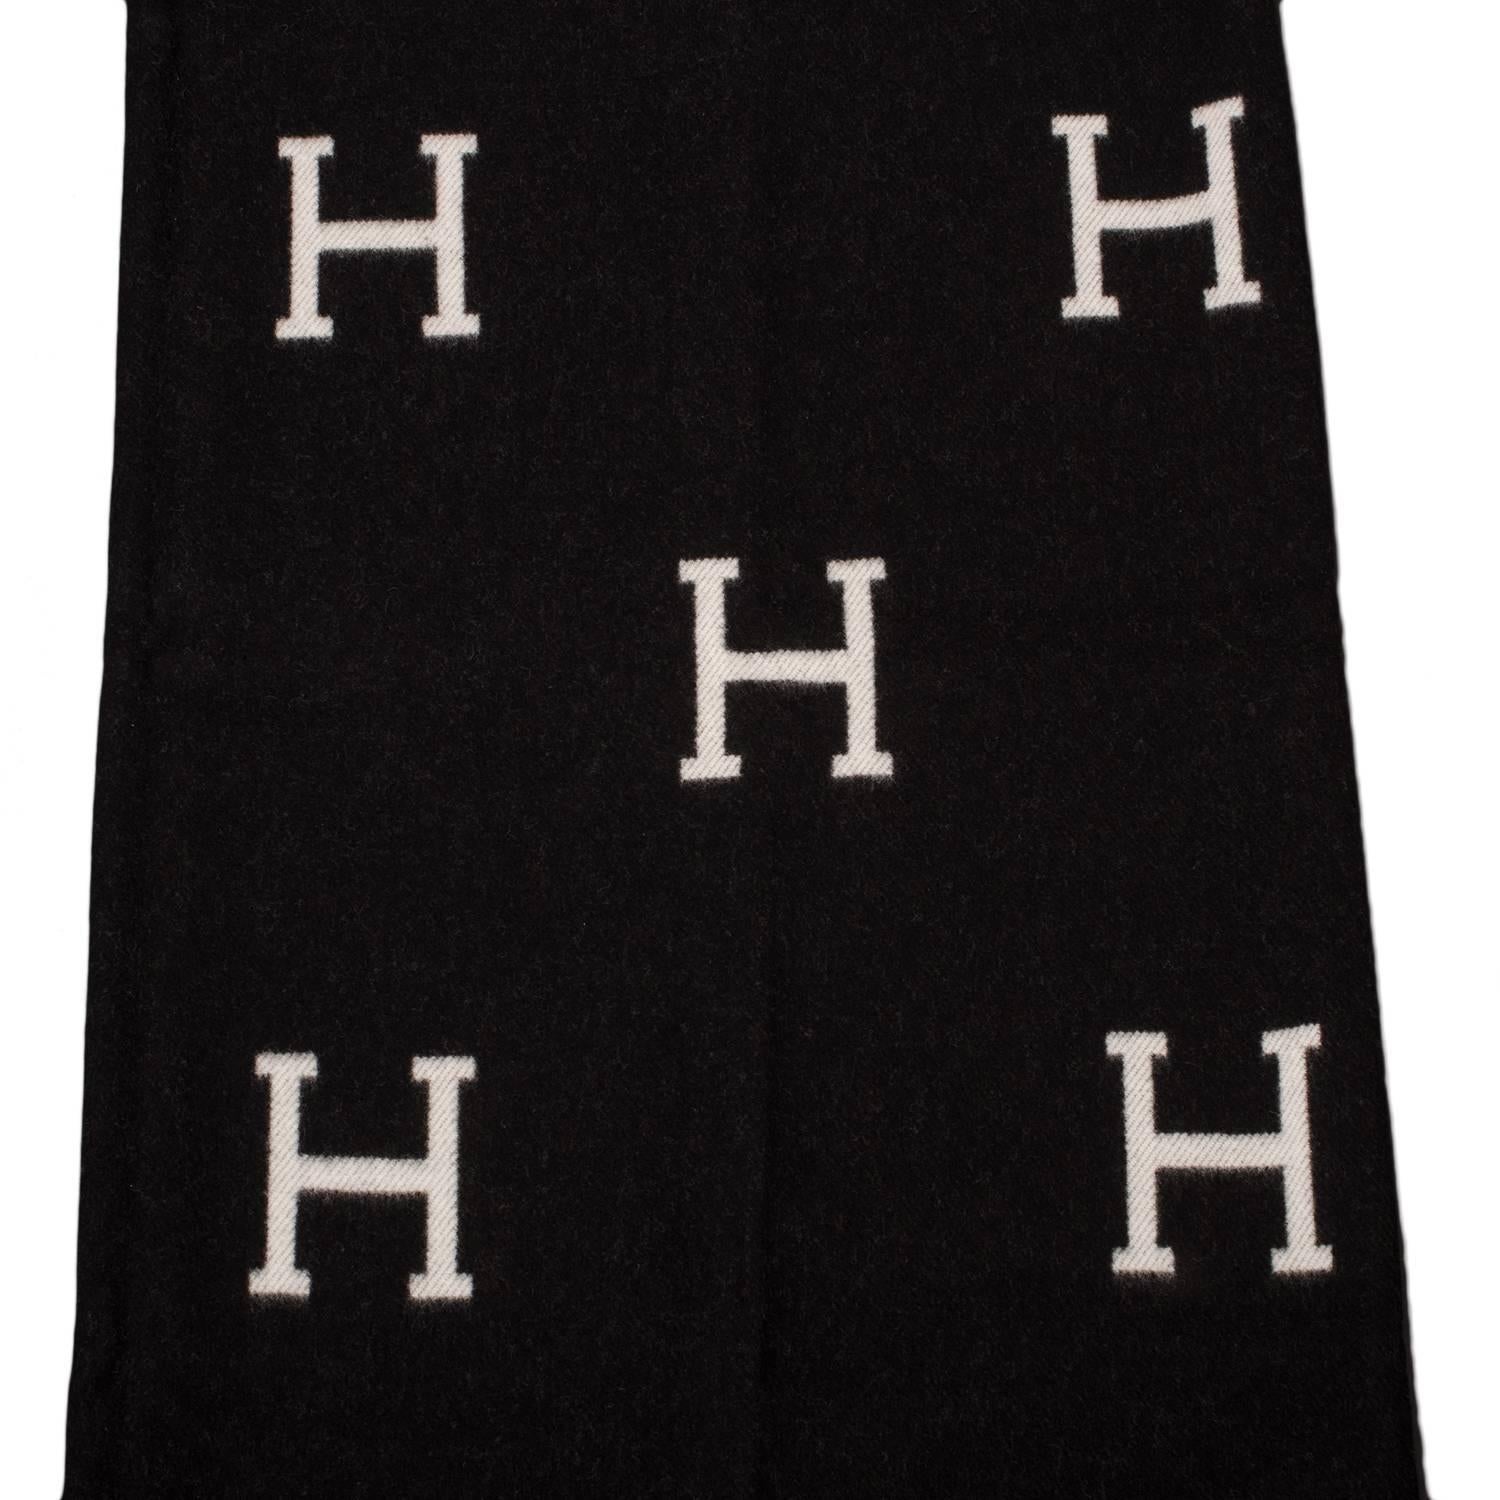 Hermes Avalon Signature H blanket in ecru/black.

The Avalon Signature H blanket is made of 85% wool, 15% cashmere.

The blanket measures 55